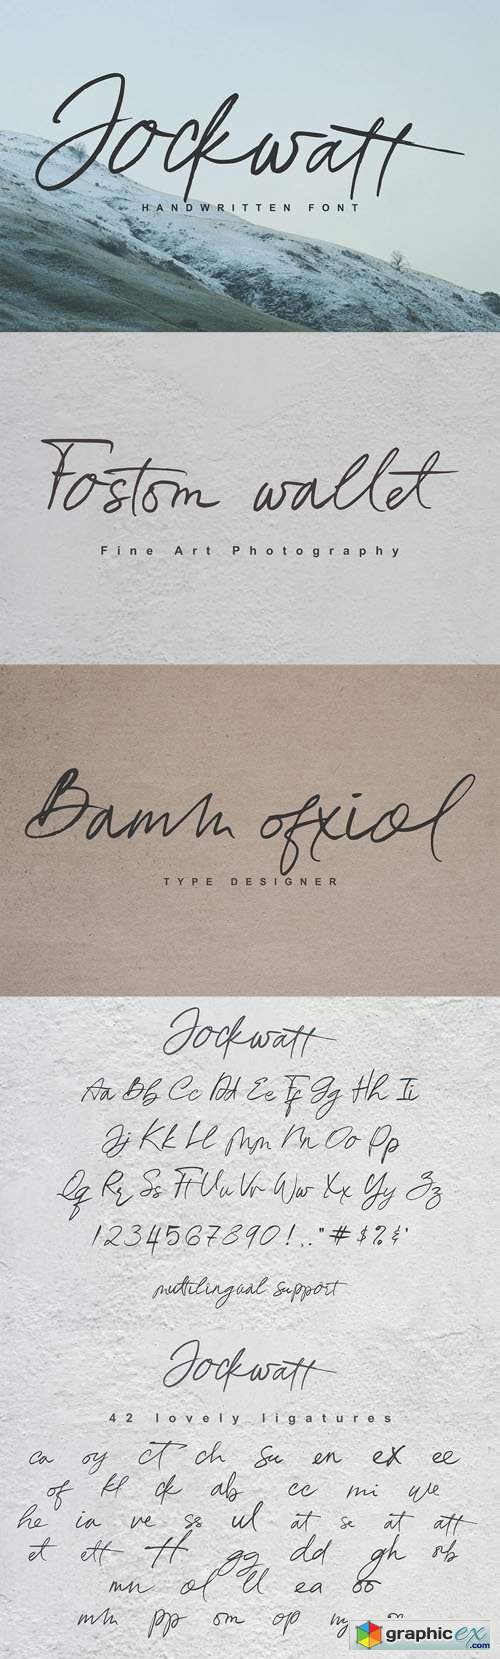  Jockwatt Handwritten Font 